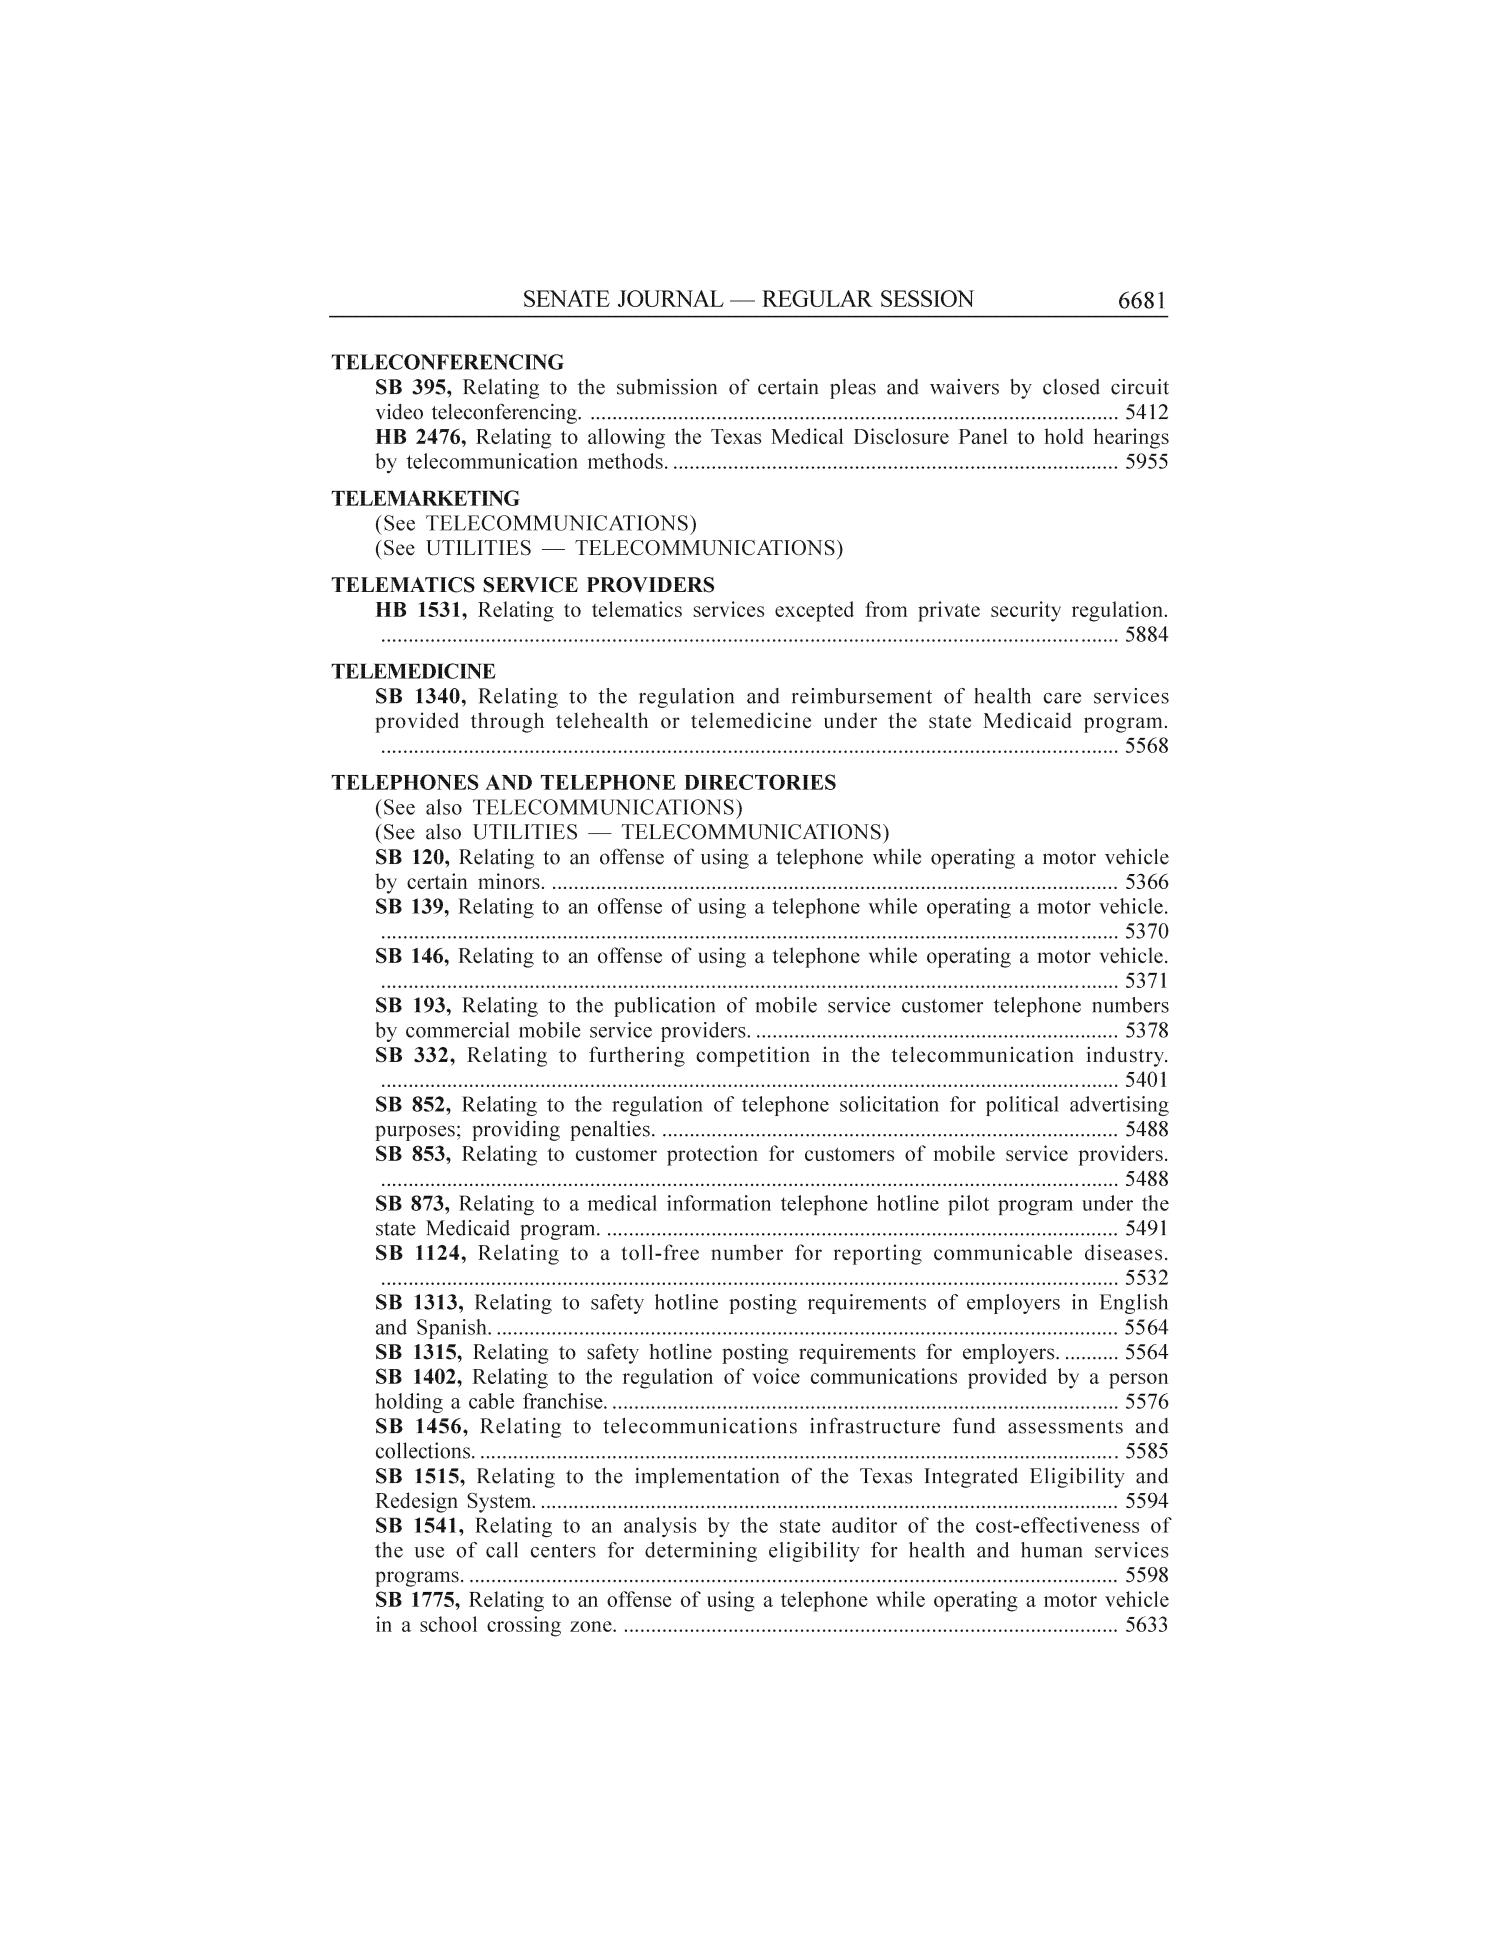 Journal of the Senate, Regular Session of the Seventy-Ninth Legislature of the State of Texas, Volume 6
                                                
                                                    6681
                                                